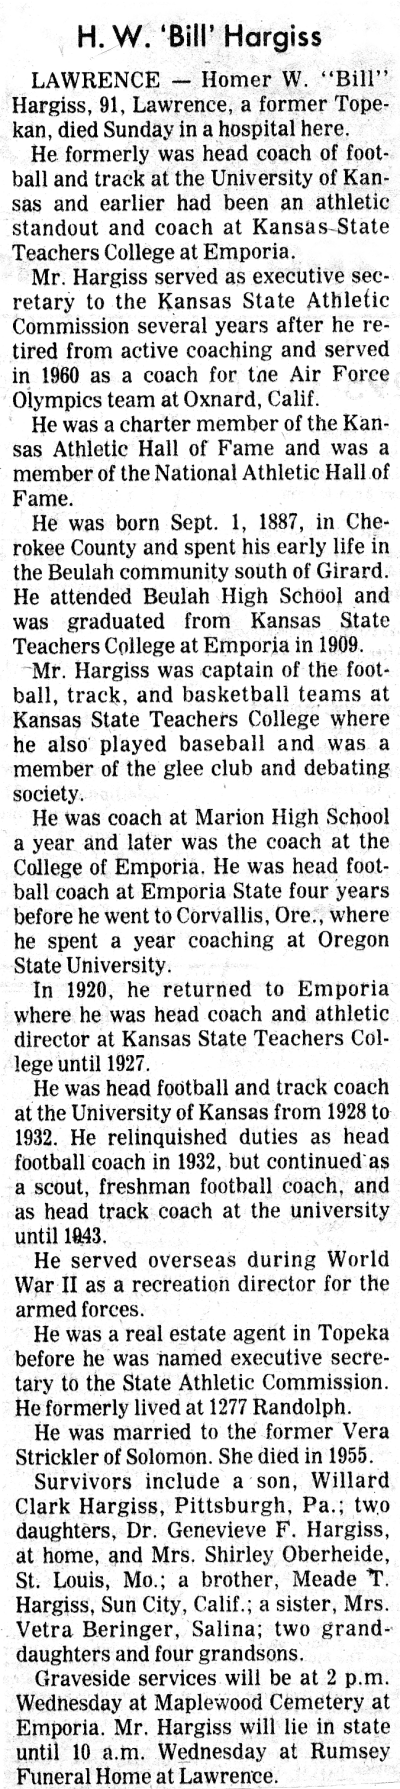 Bill Hargiss obituary in the Topeka Capitol-Journal